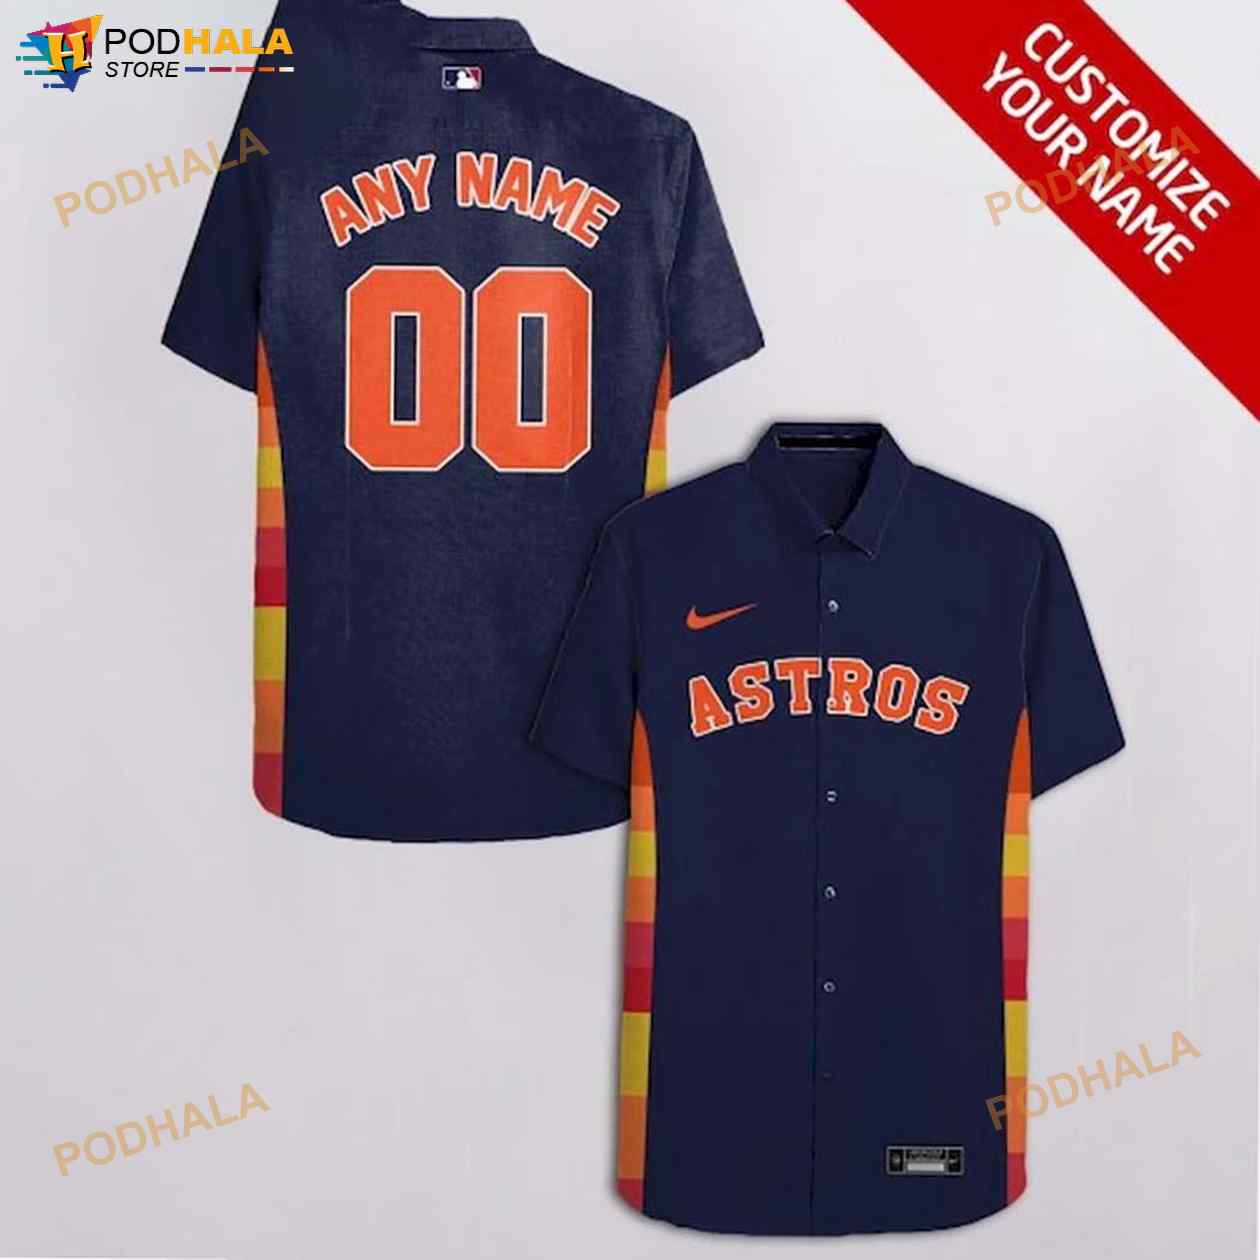 Custom Name MLB Houston Astros Special Hawaiian Design Button